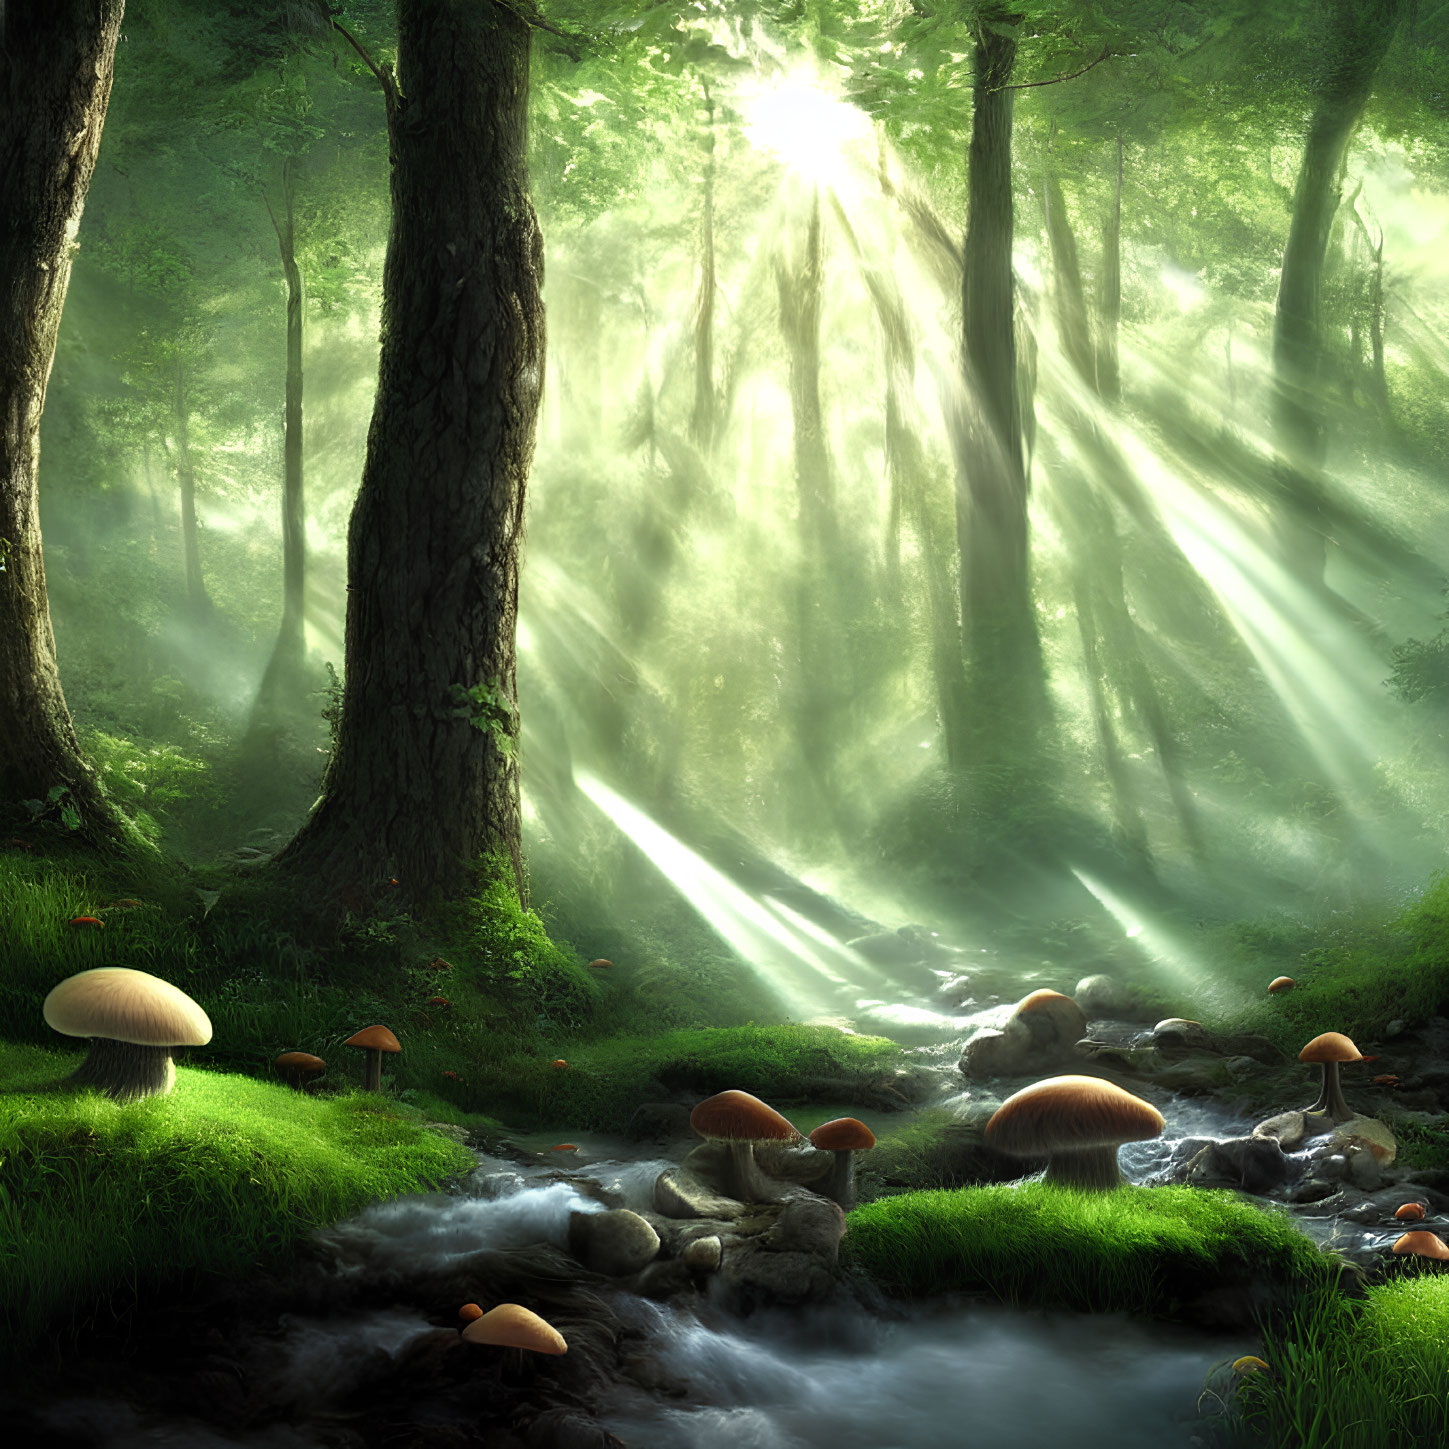 Lush green forest with sunlight illuminating mushrooms and stream